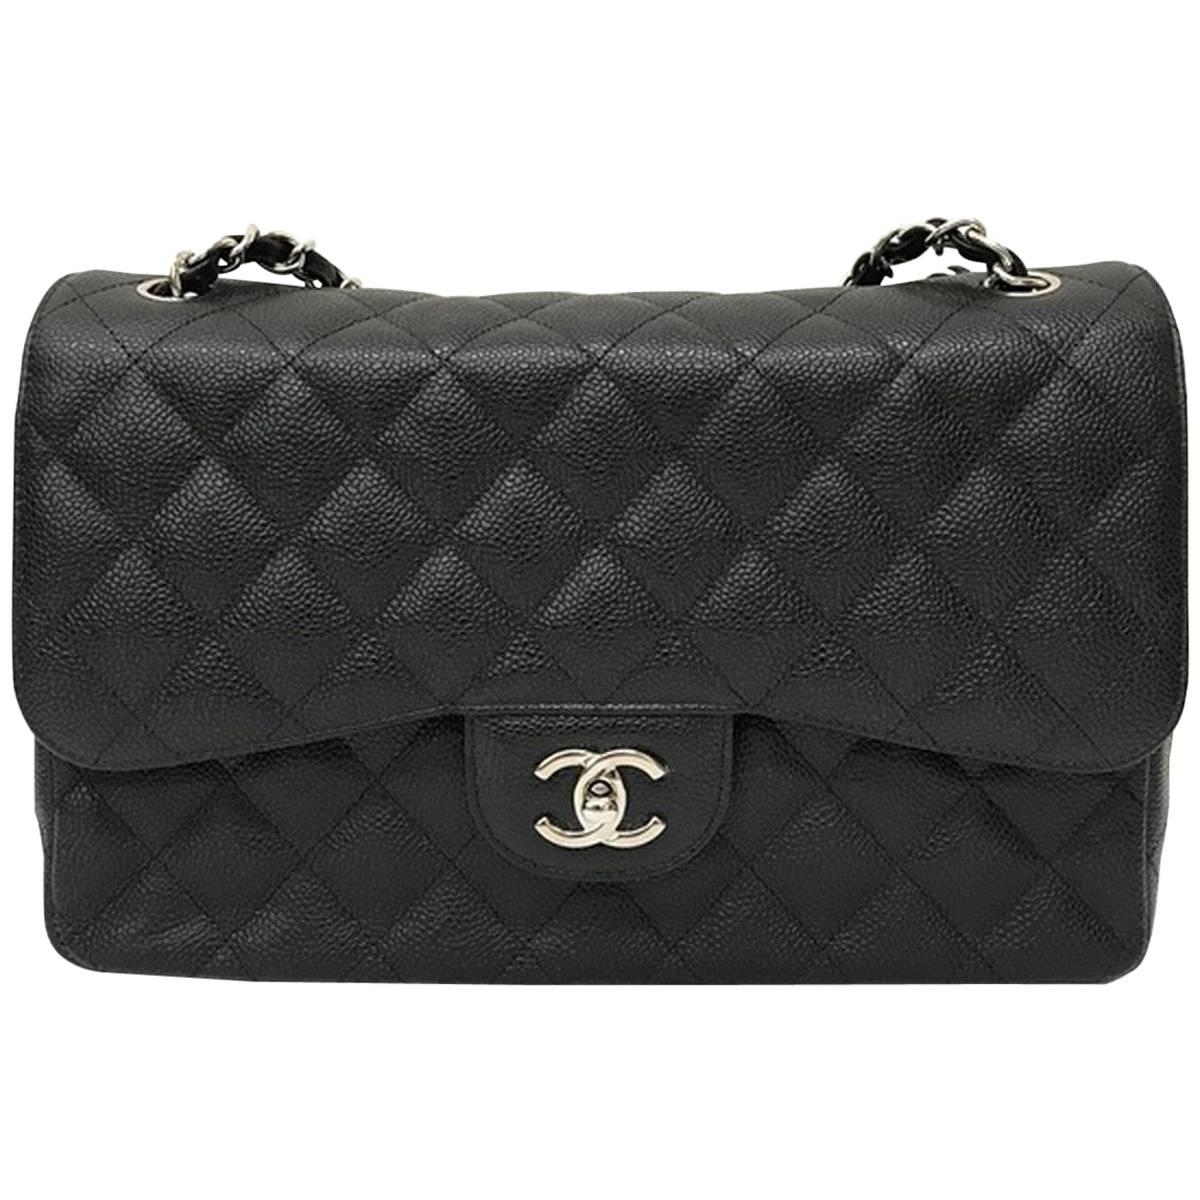 Chanel Black Jumbo Classic Chain Bag